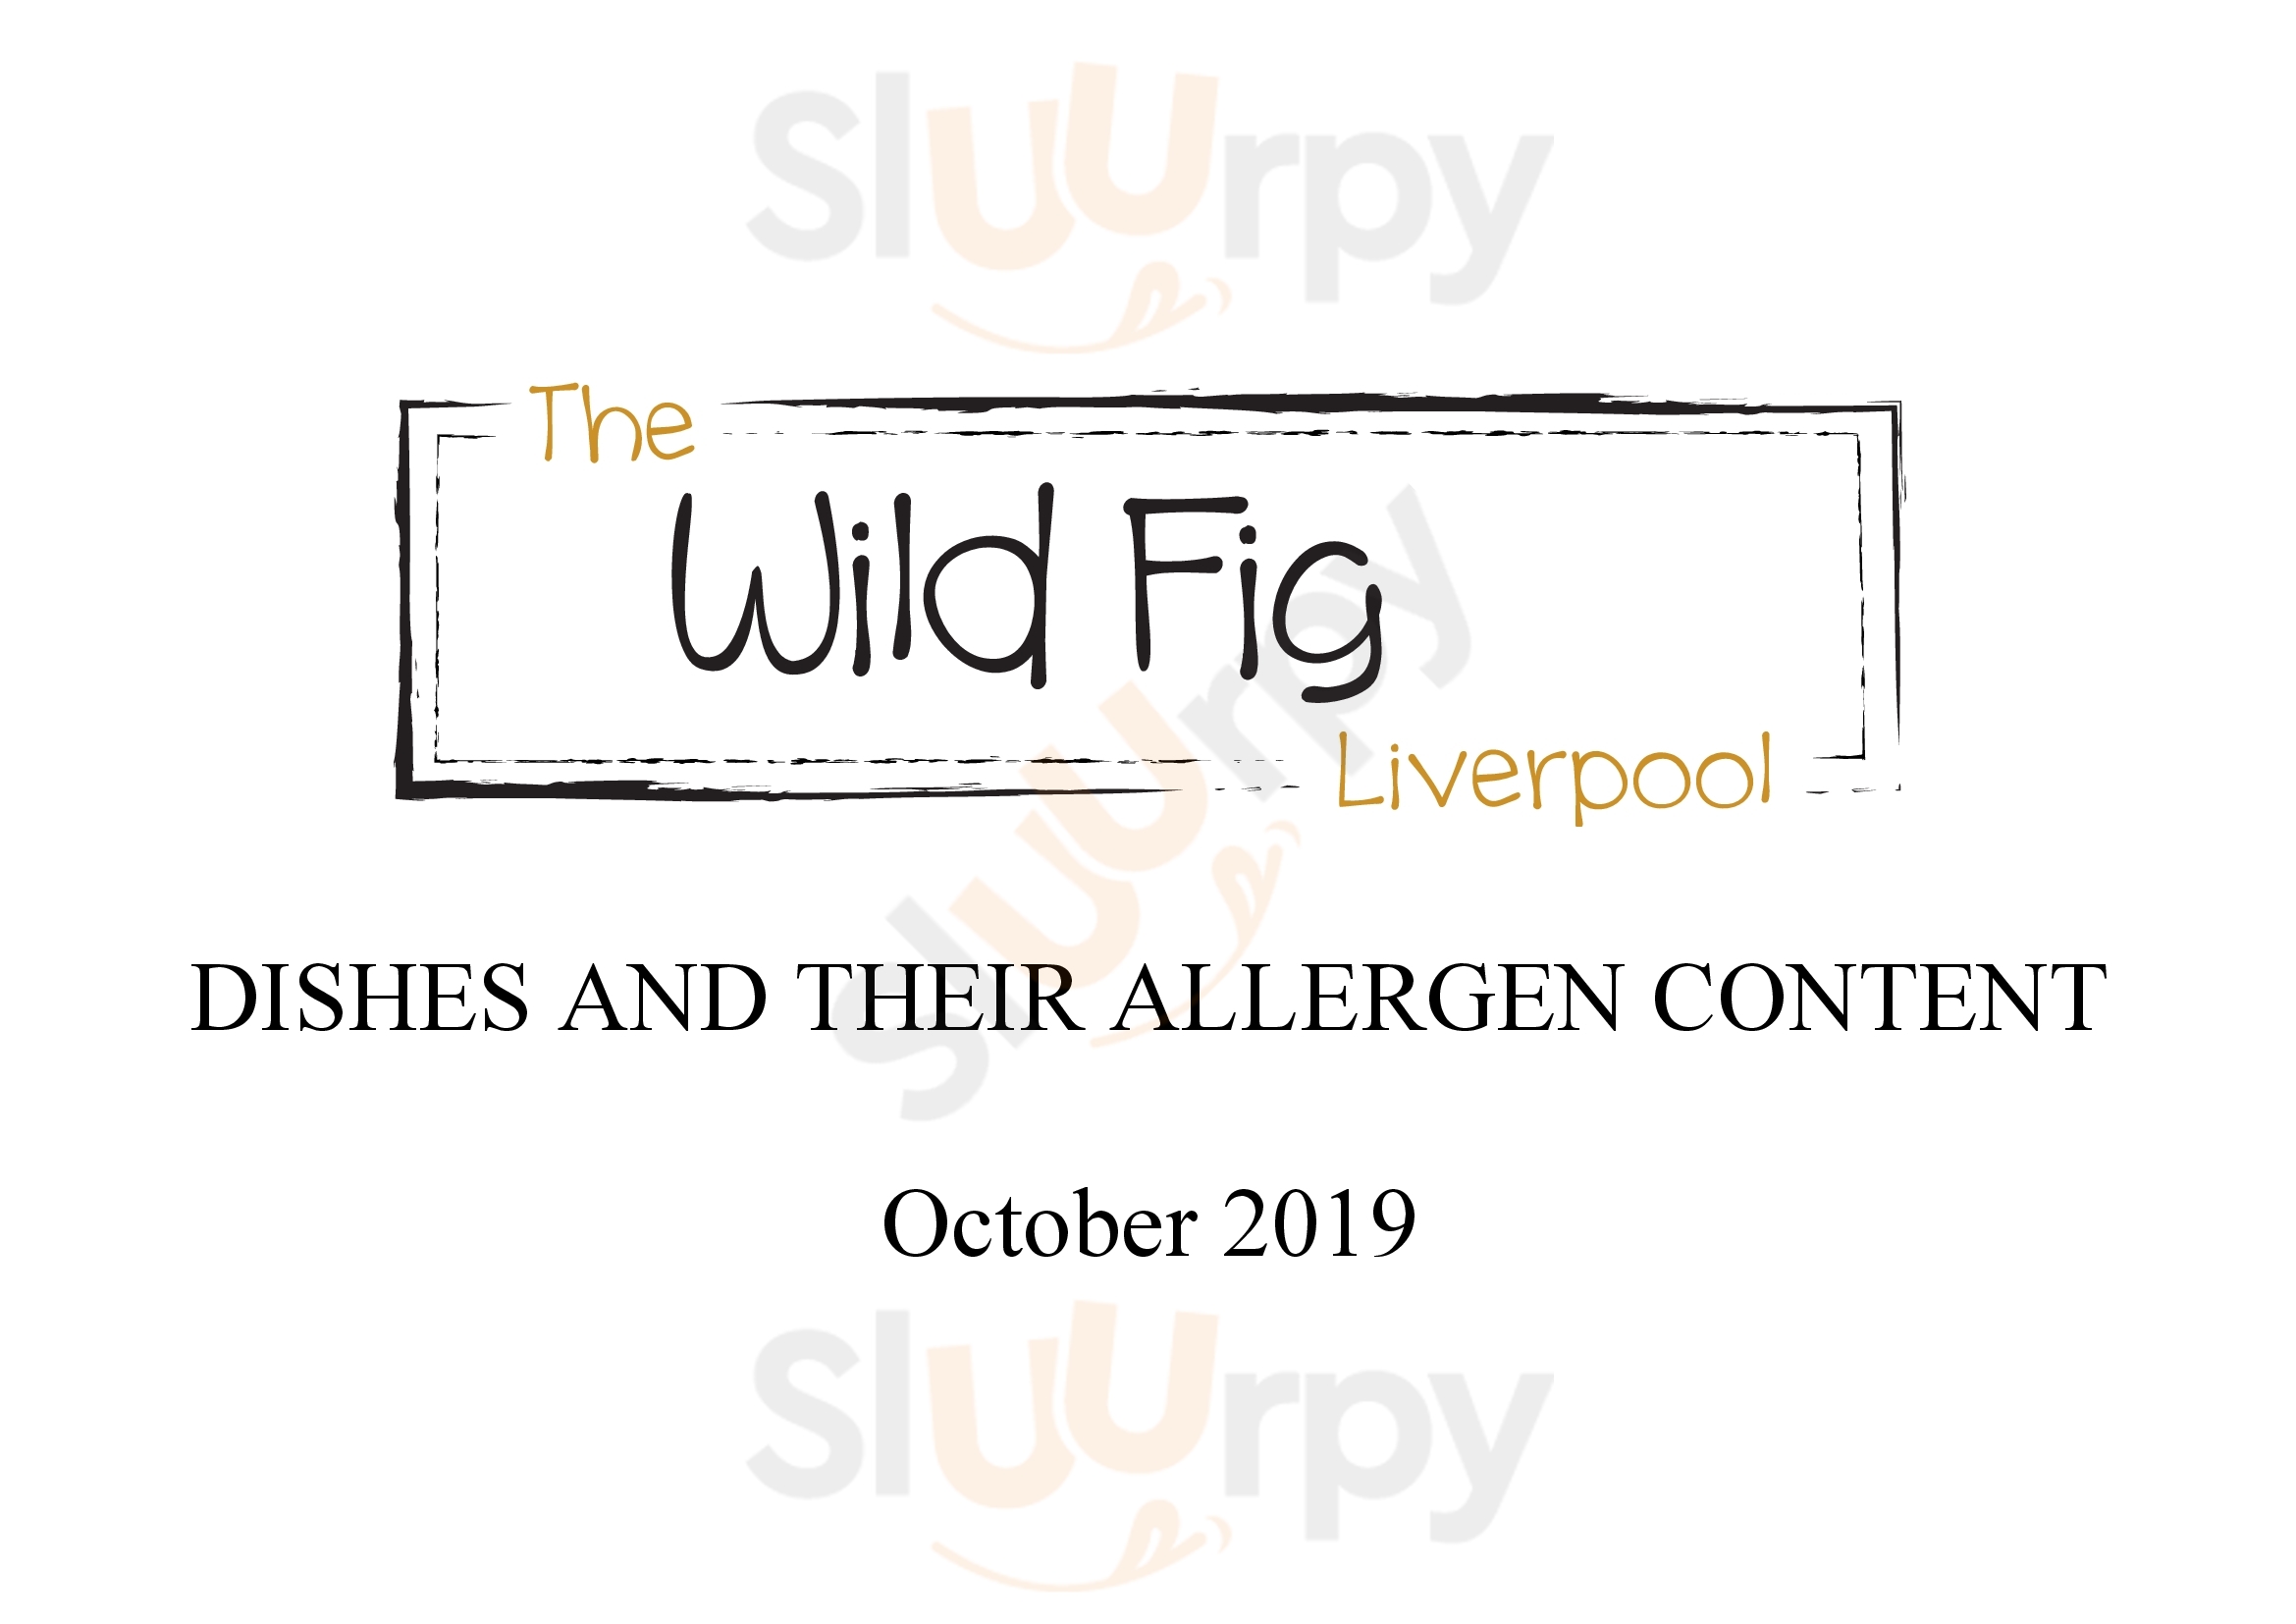 The Wild Fig Liverpool Menu - 1